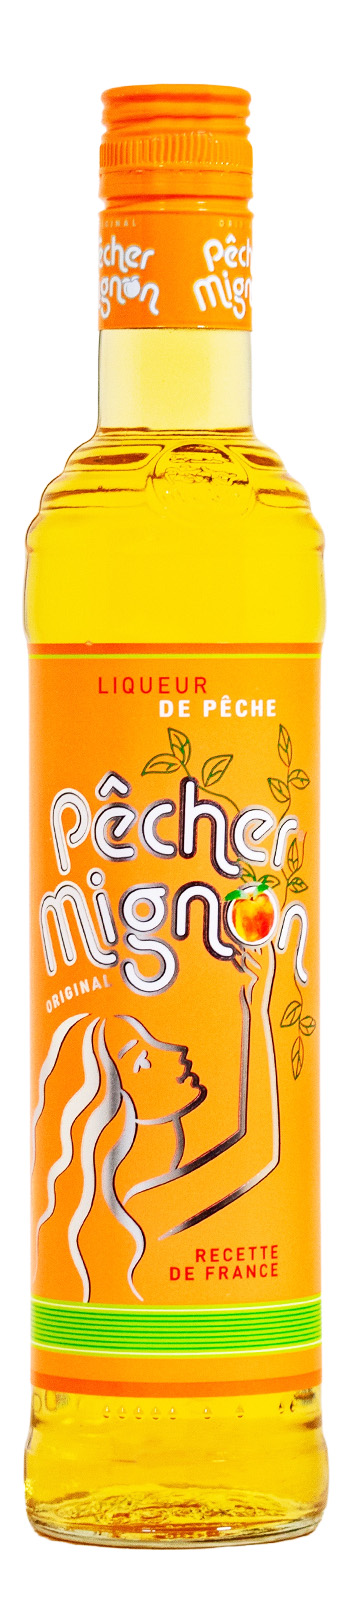 Pecher Mignon Pfirsichlikör - 0,5L 15% vol